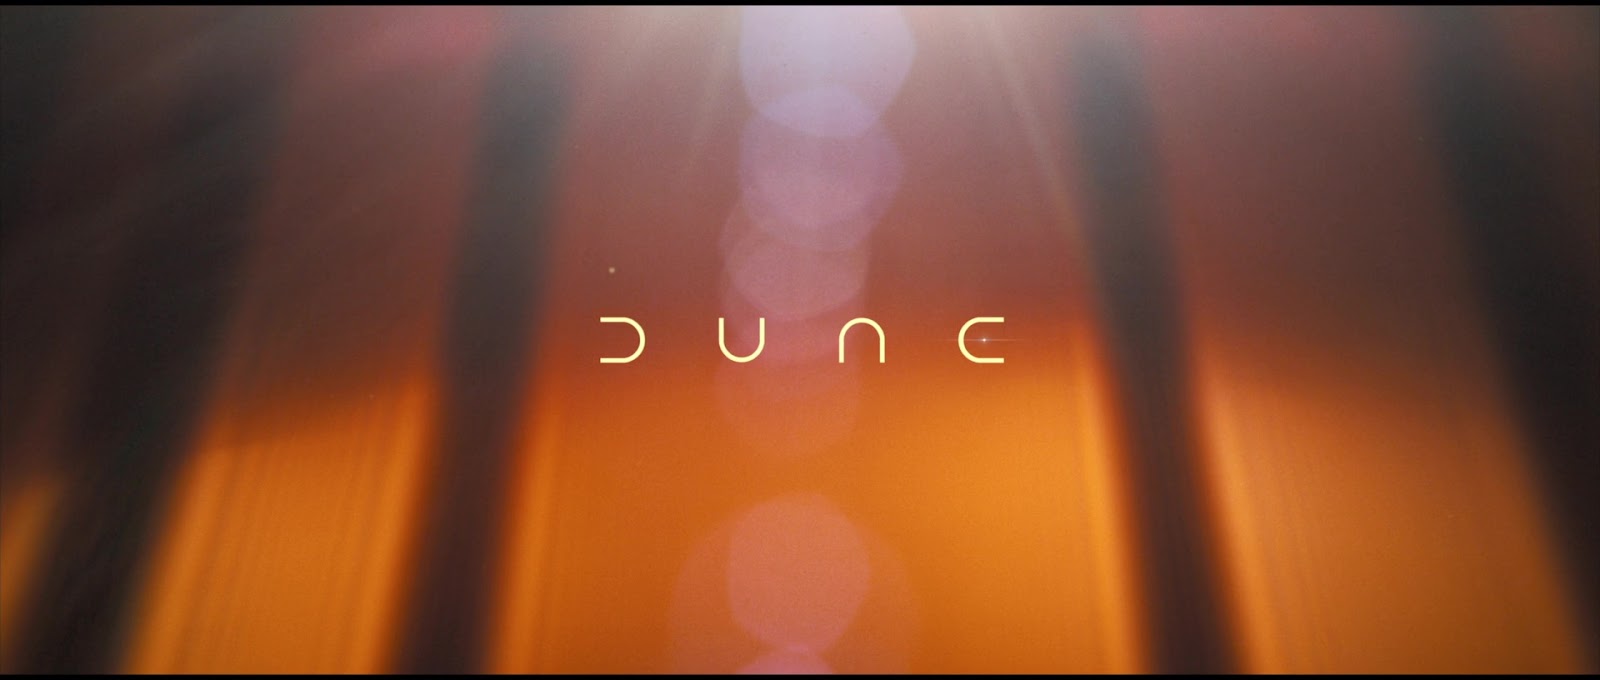 Duna (2021) 720p WEB-DL Latino